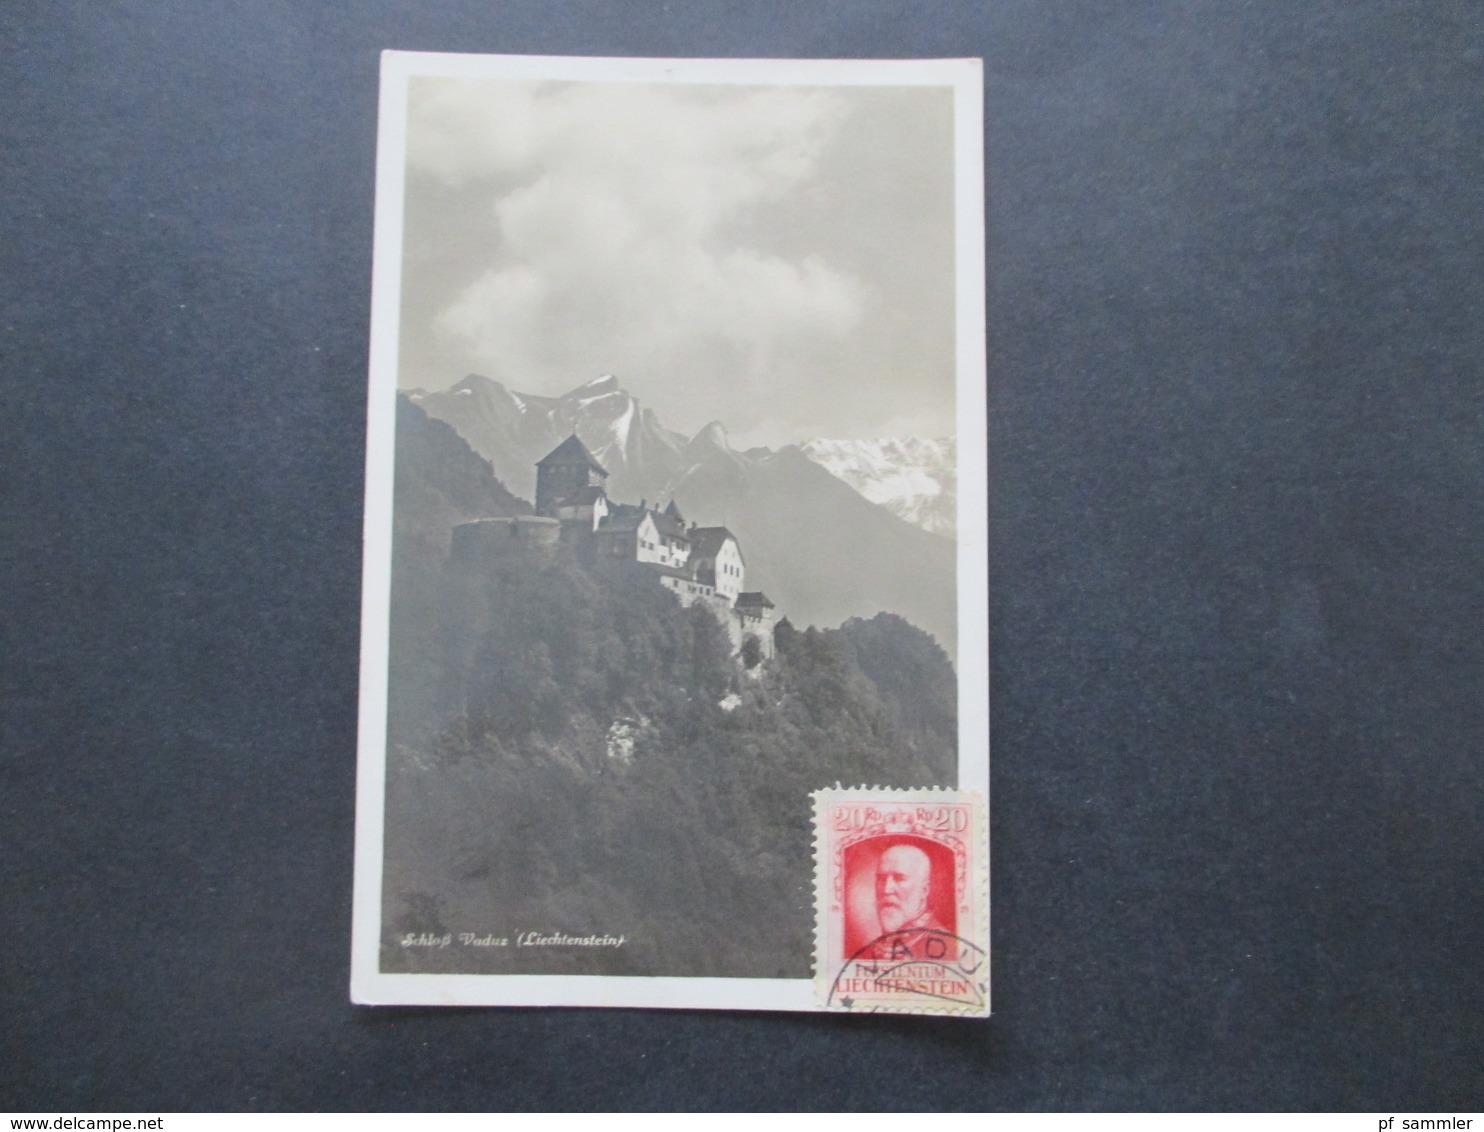 Liechtenstein 1930 Echtfoto AK Schloß Vaduz Roter Stp. Sieger Neuheuten Dienst + Unterschrift Hermann E. Sieger - Covers & Documents